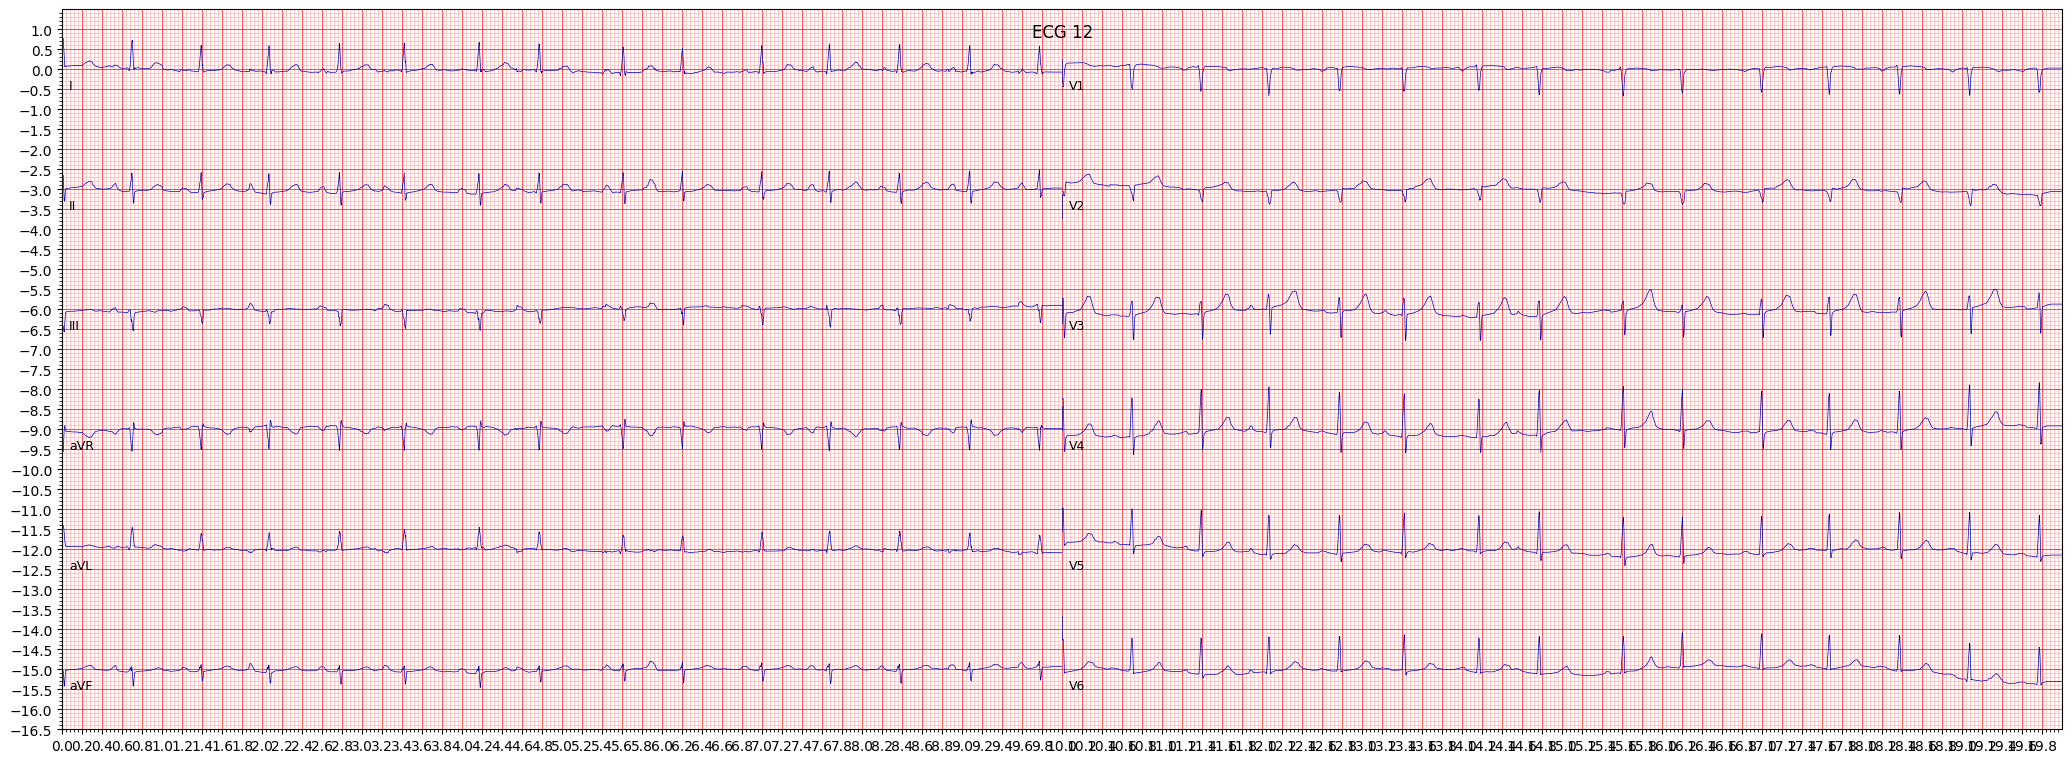 anterior myocardial infarction (AMI) example 4946